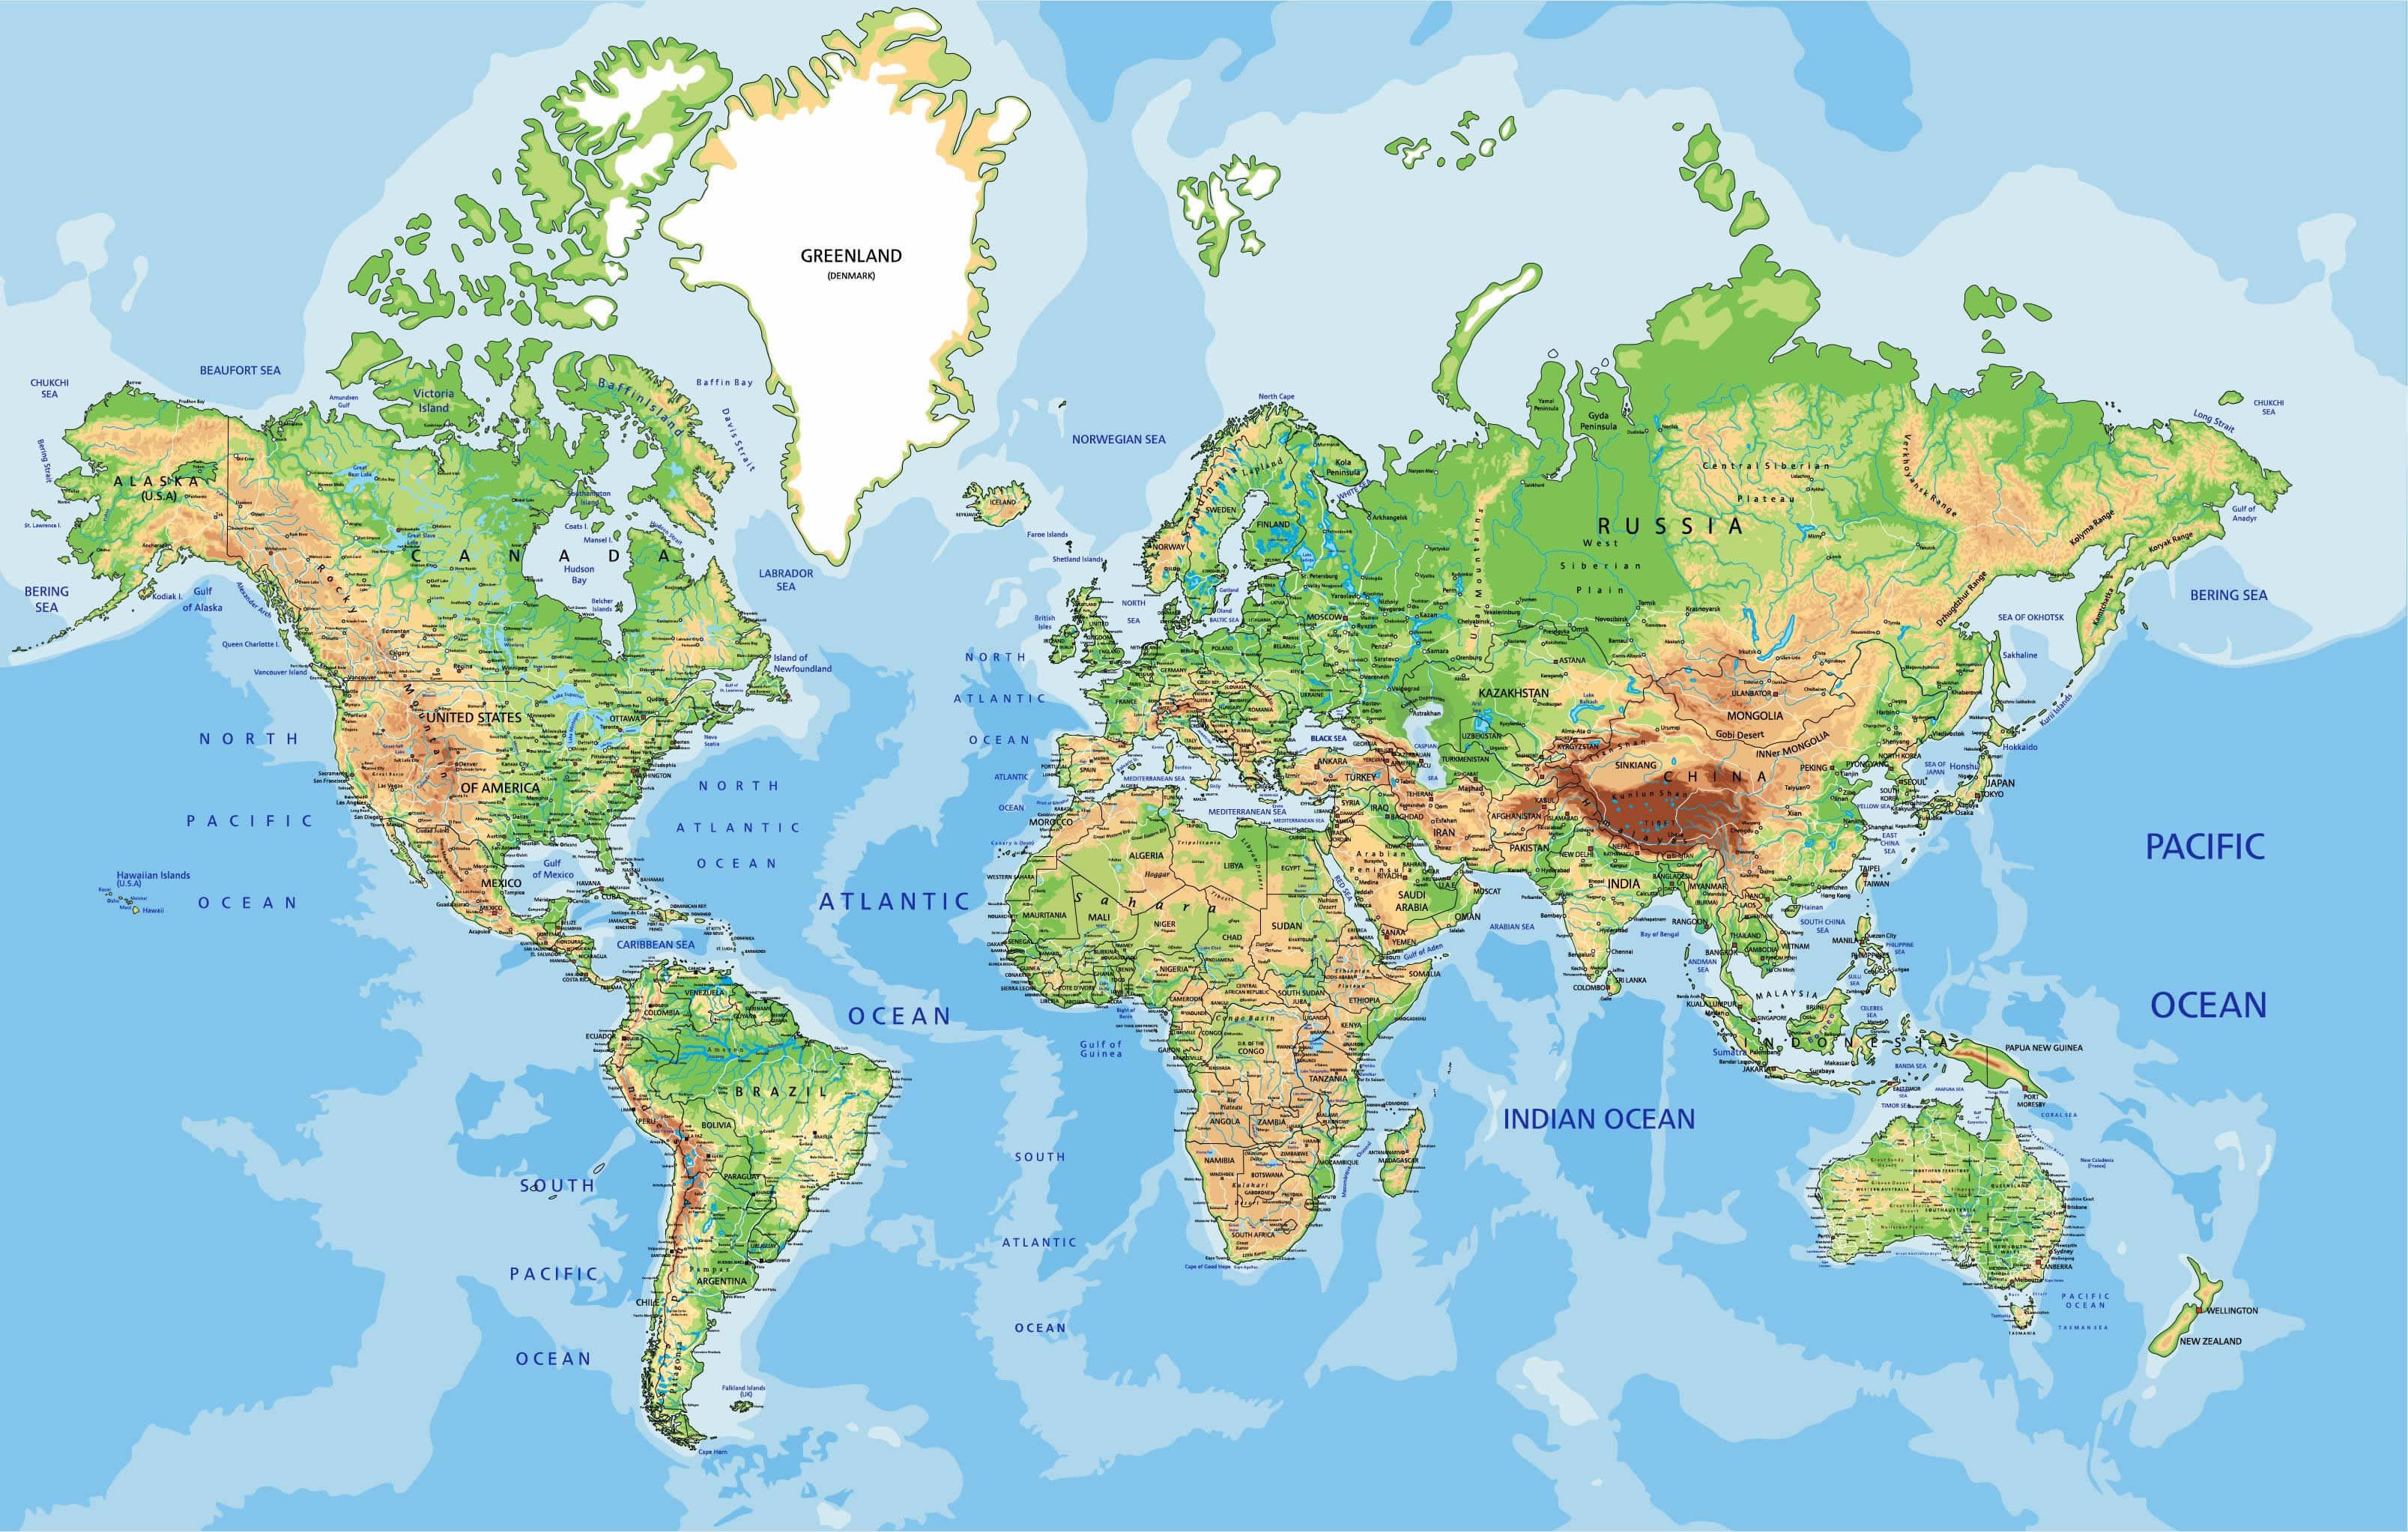 Peta Dunia - Guide of the World